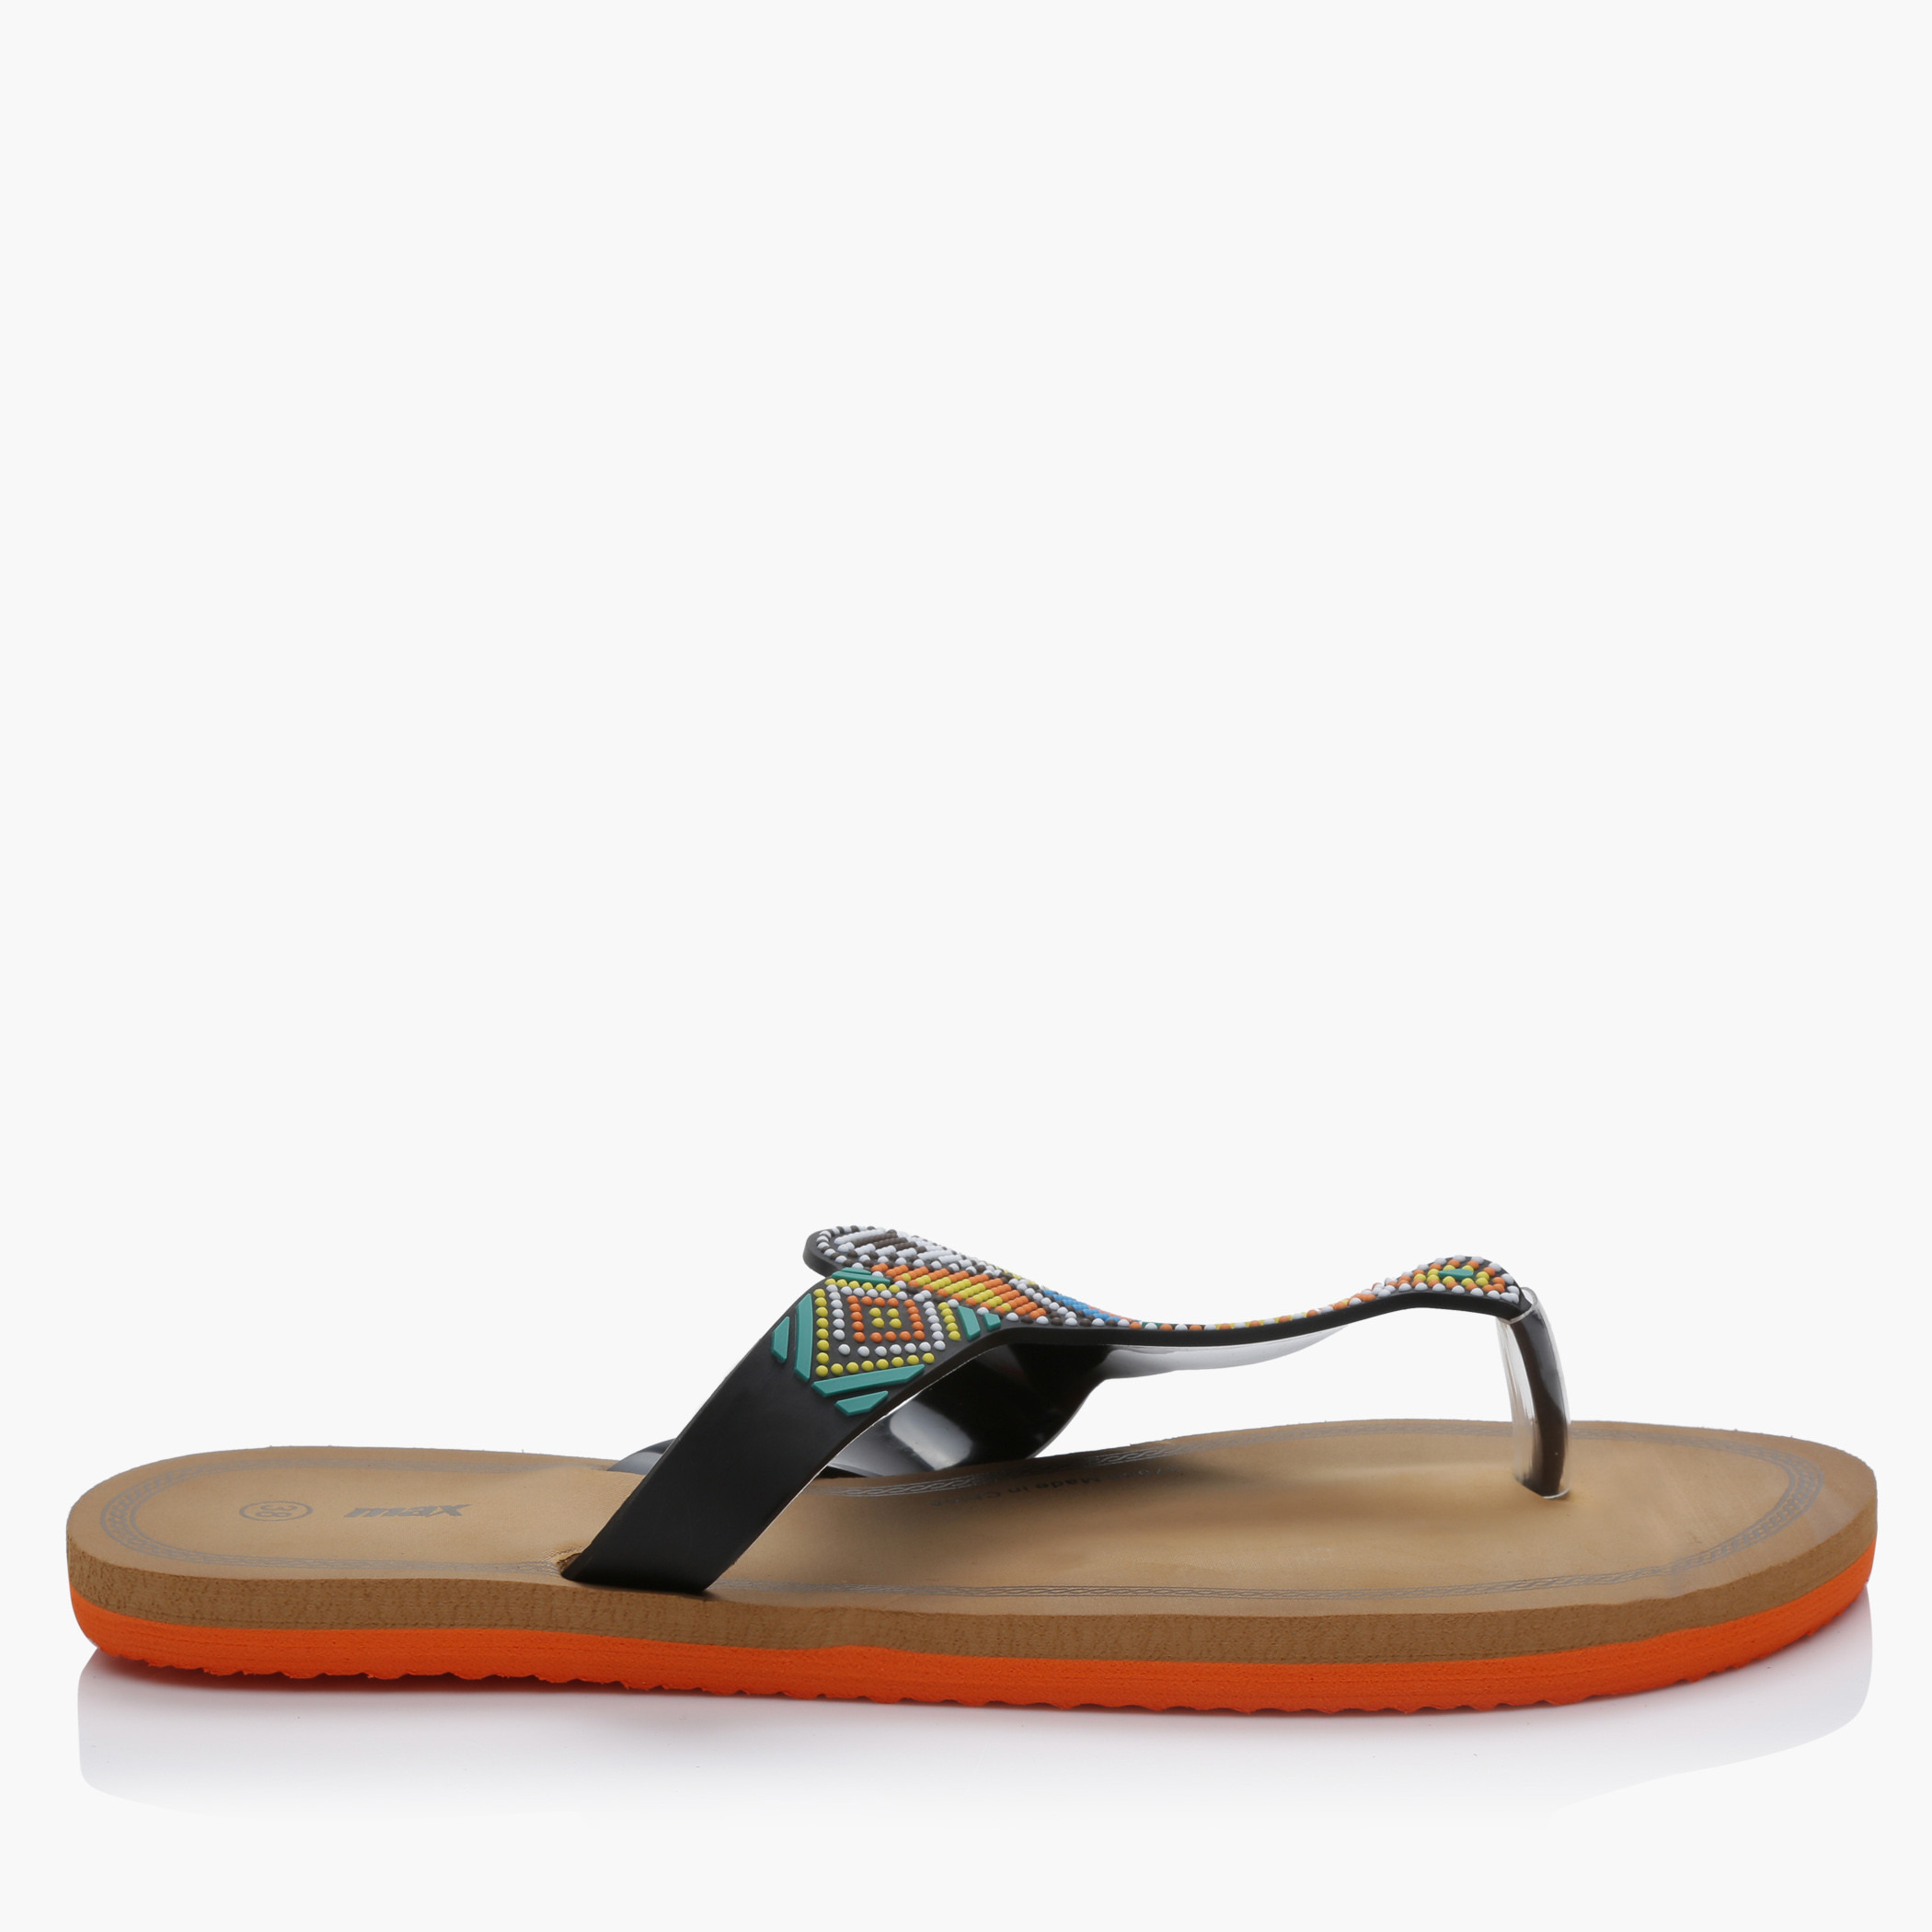 Shop Designer Women's Flat Sandals Online | Chic